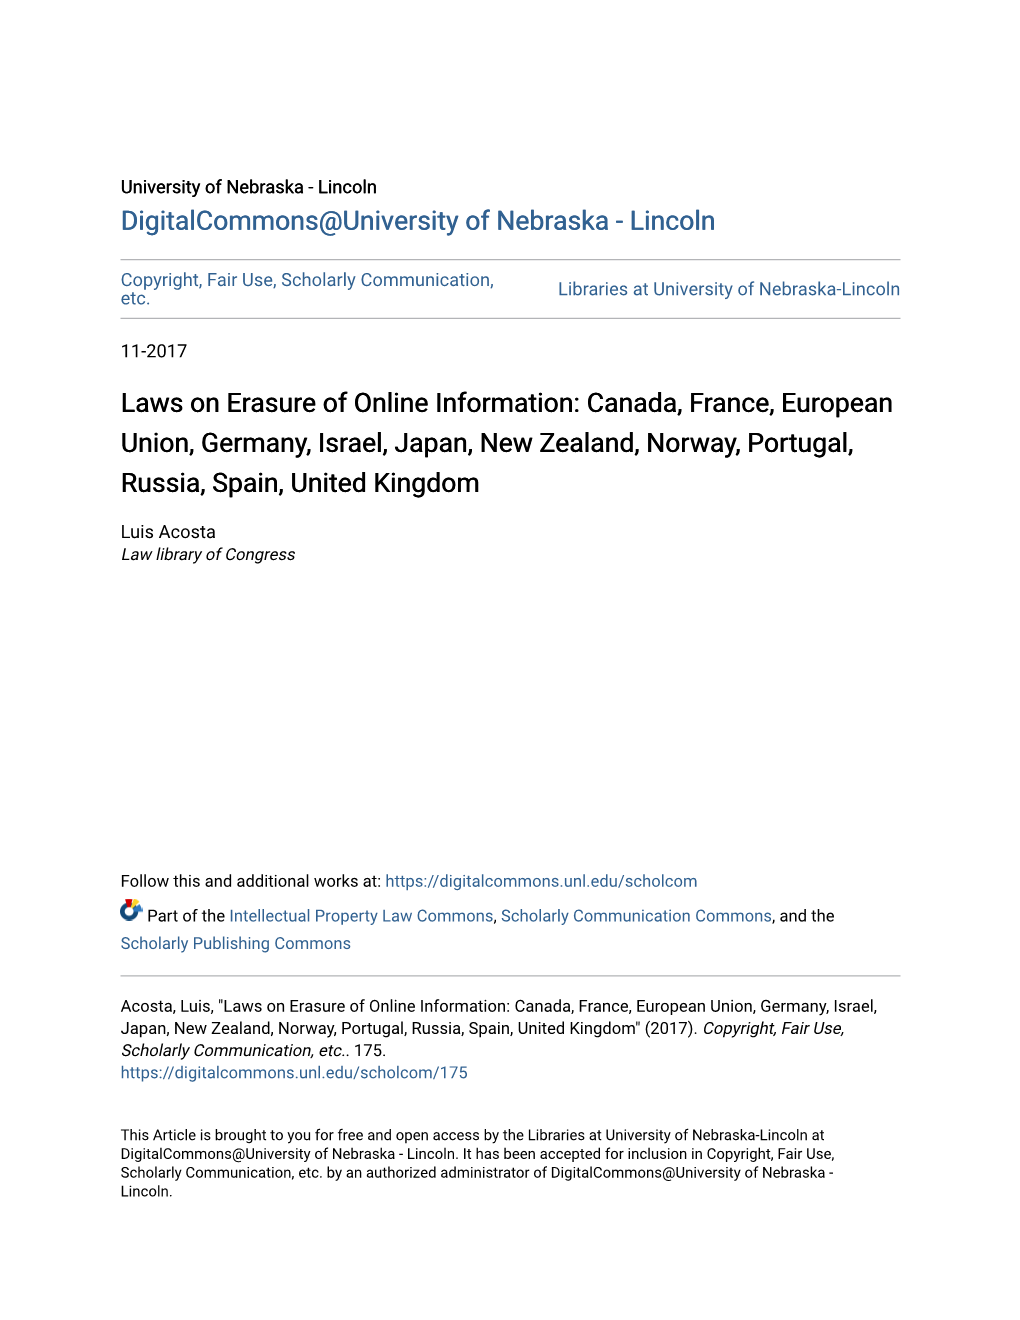 Laws on Erasure of Online Information: Canada, France, European Union, Germany, Israel, Japan, New Zealand, Norway, Portugal, Russia, Spain, United Kingdom